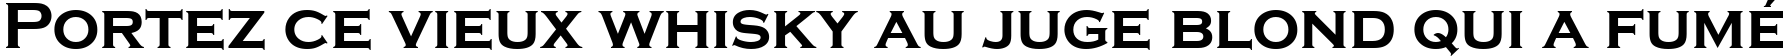 Пример написания шрифтом Copperplate Gothic Bold текста на французском